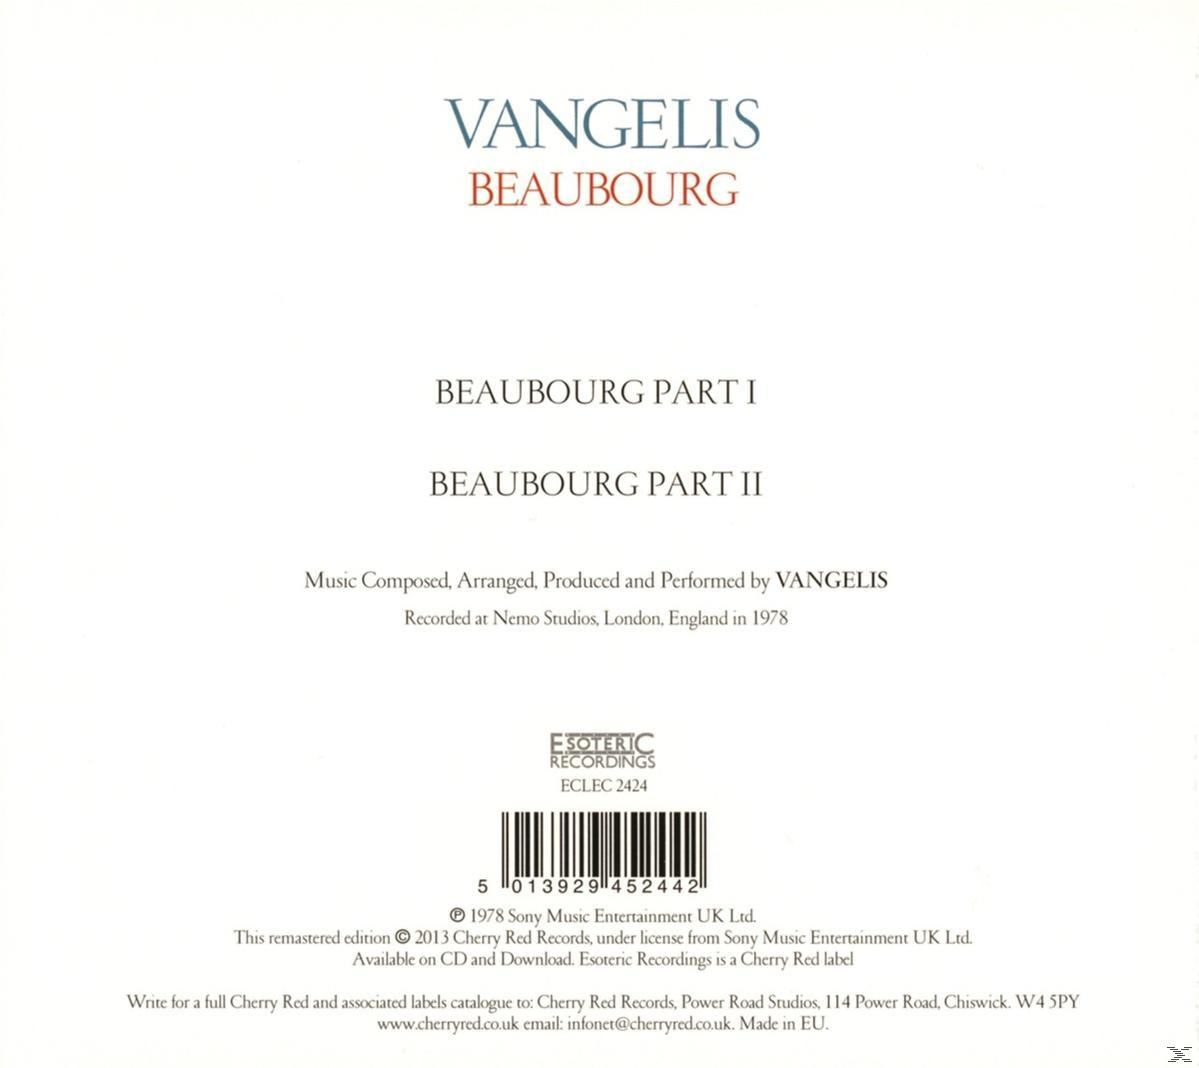 Vangelis - Beaubourg Edition) (CD) - (Remastered